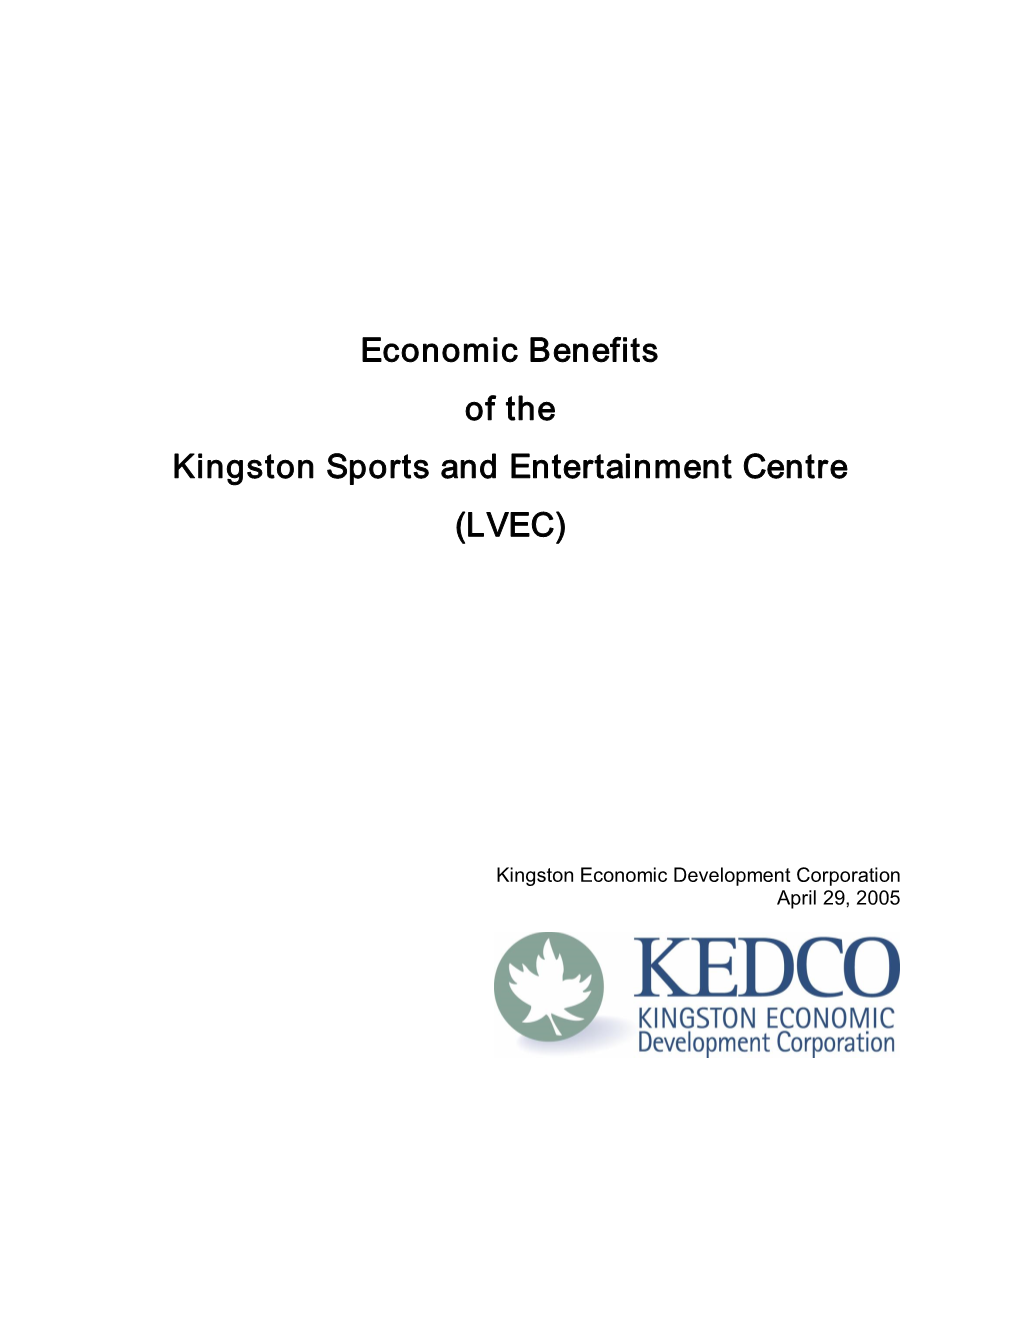 Economic Benefits of the Kingston Sports and Entertainment Centre (LVEC)